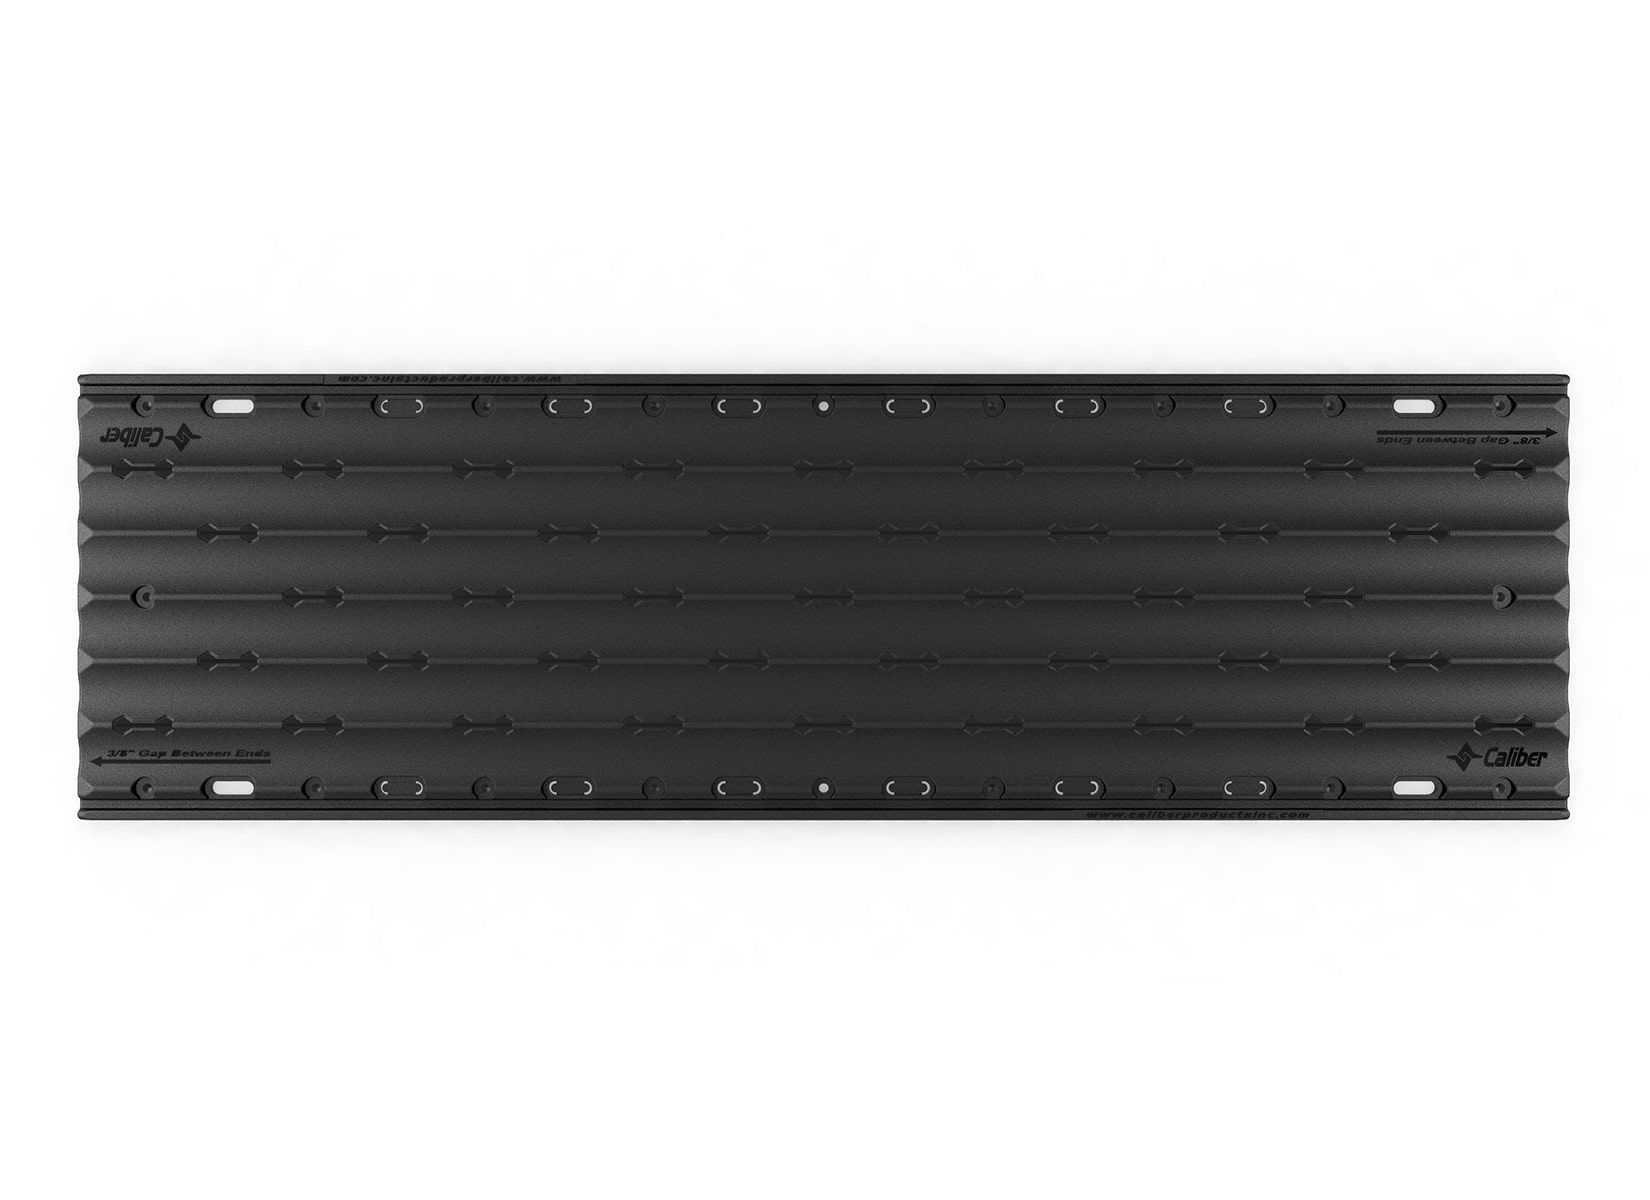 Caliber 13373 - LowPro Glides - Standard 9" Wide - Extension Set - 4pieces (10' Total)